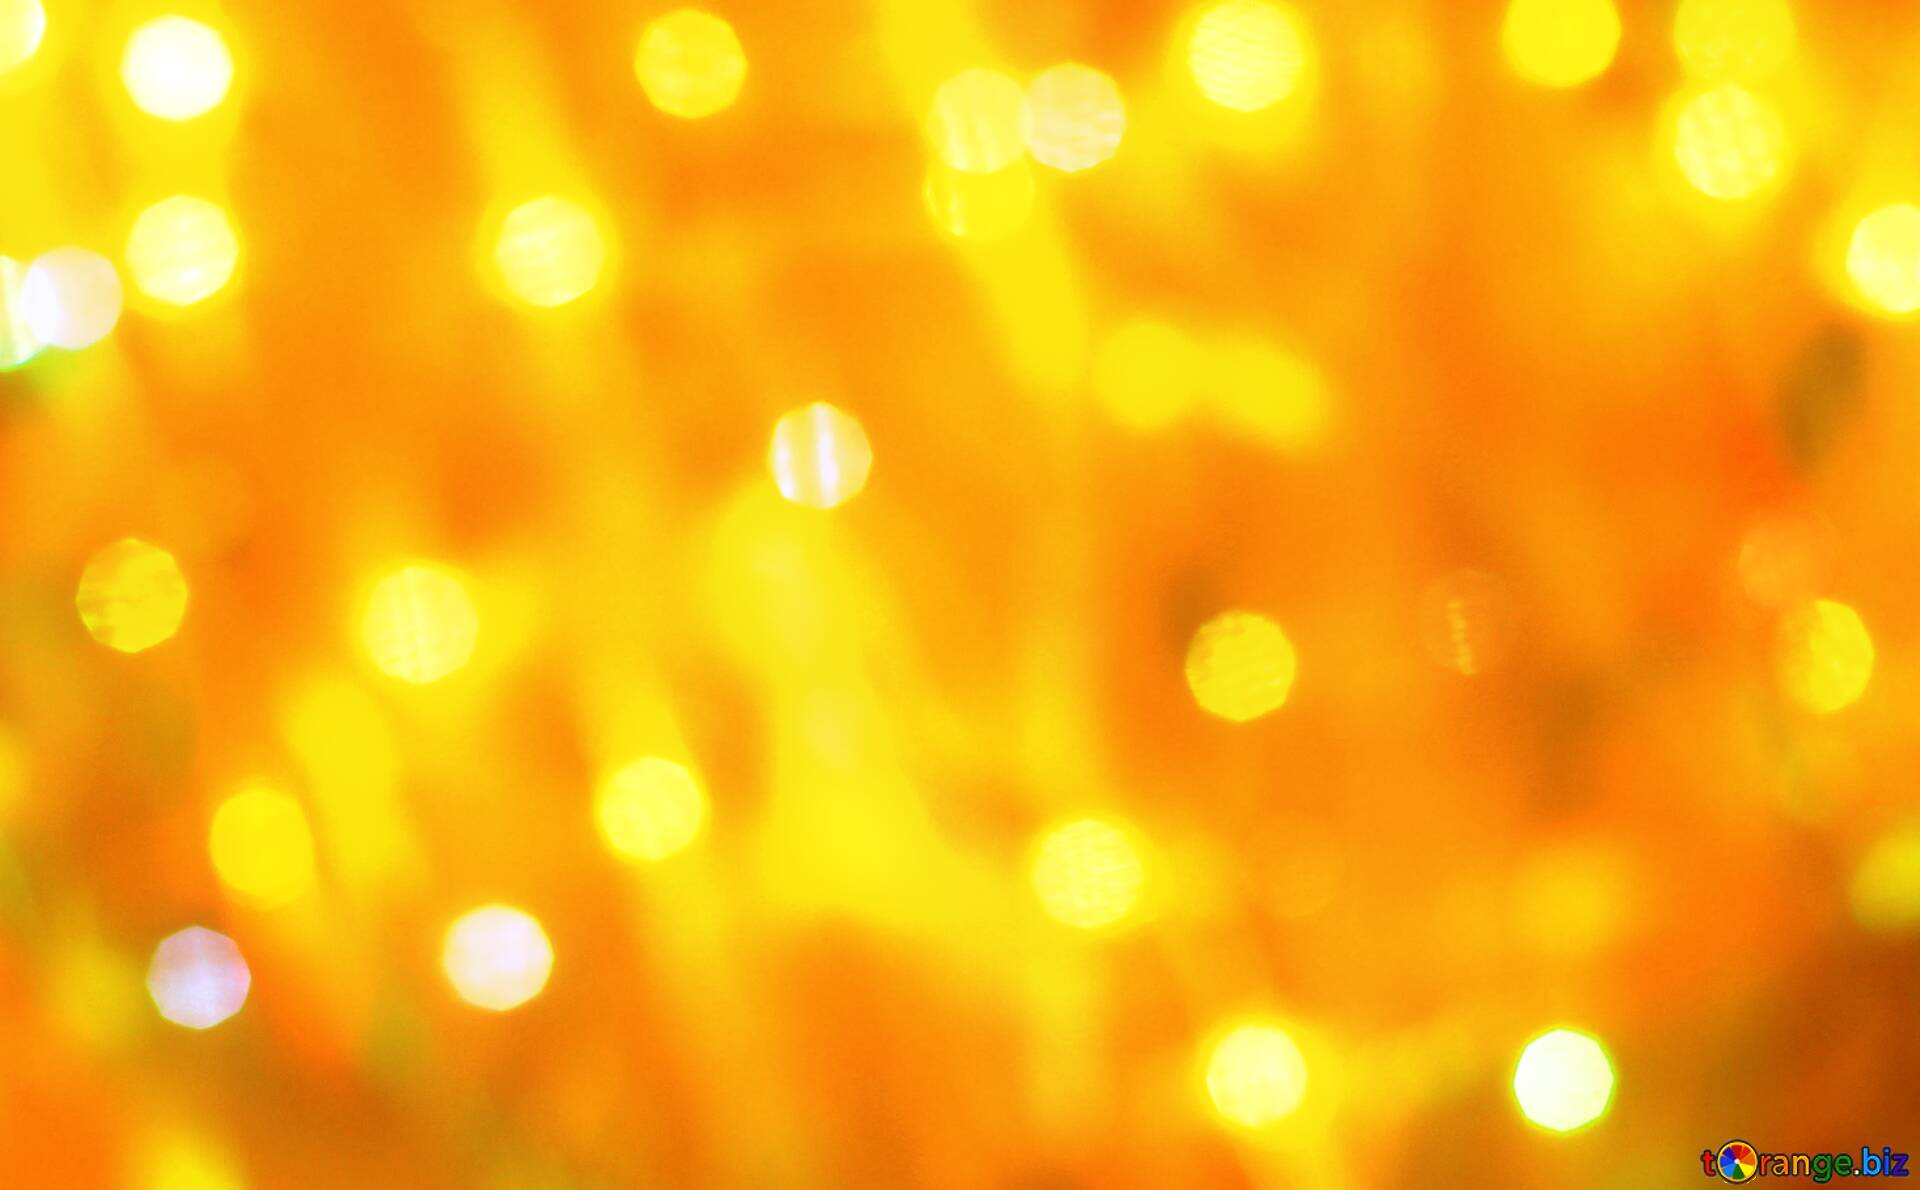 Download Descargar foto gratis Lights in the bokeh yellow background en CC-BY Licencia ~ Stock de ...